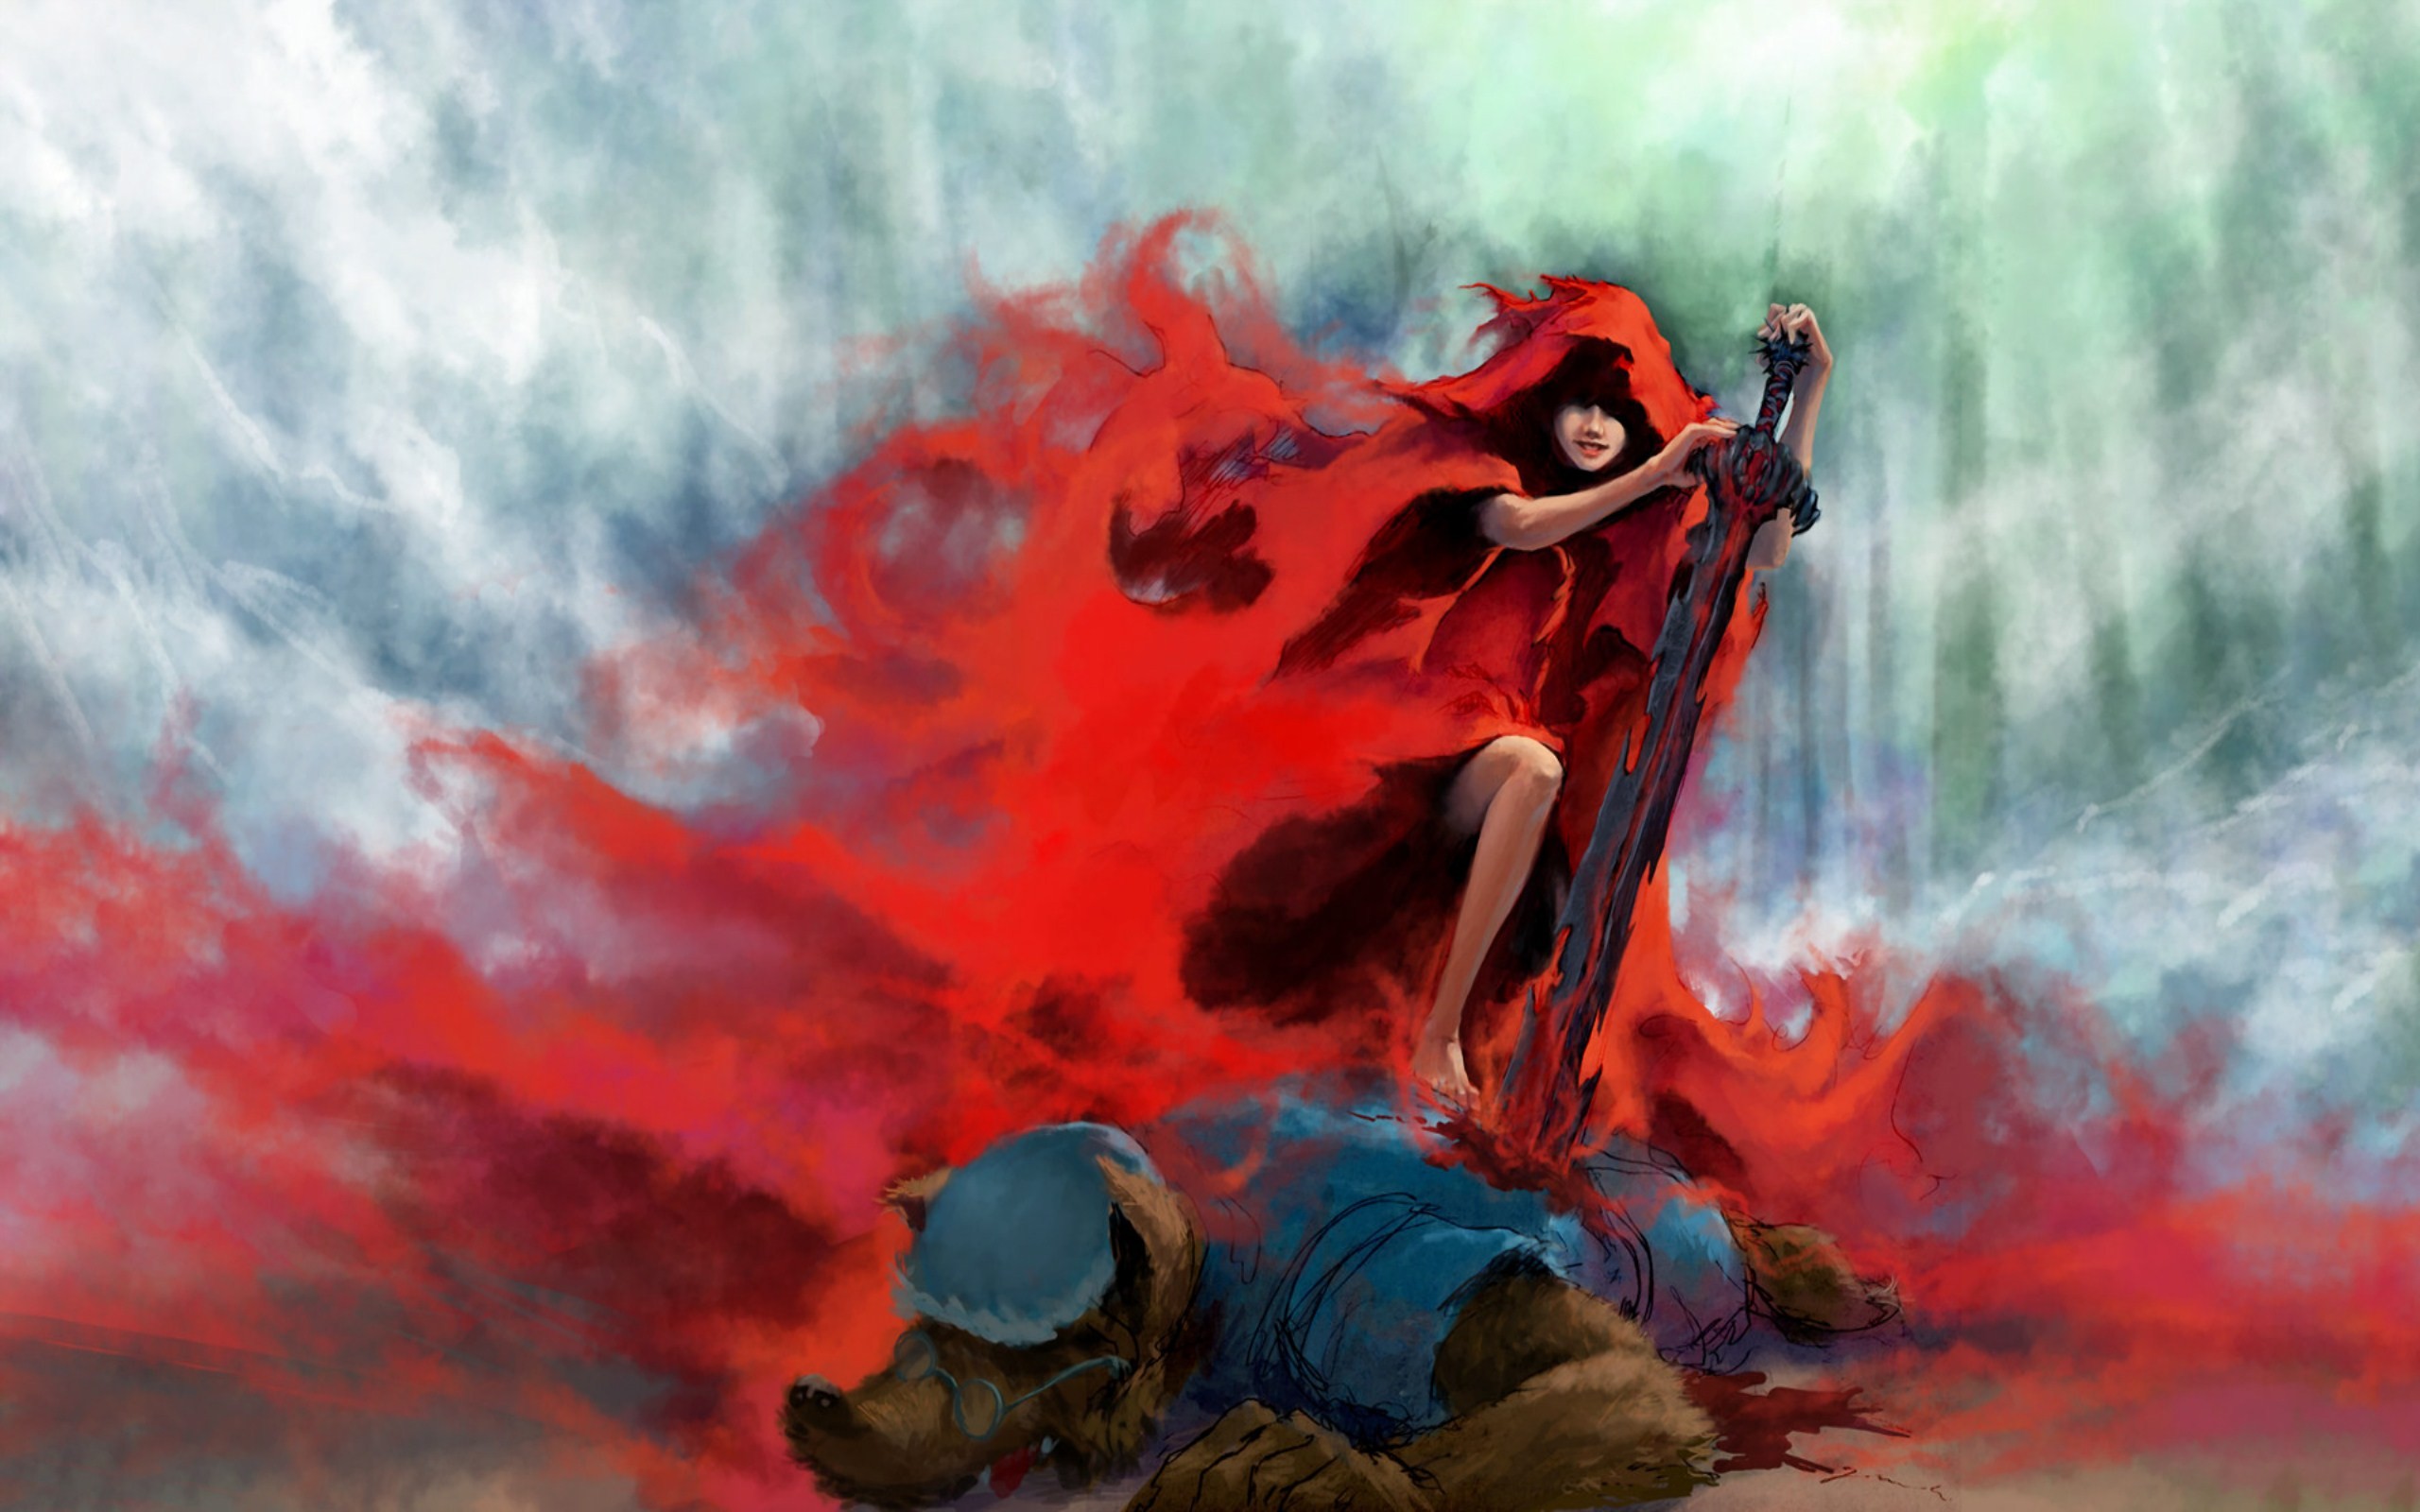 Rain Little Red Riding Hood Fantasy Art Artwork Swords Images, Photos, Reviews